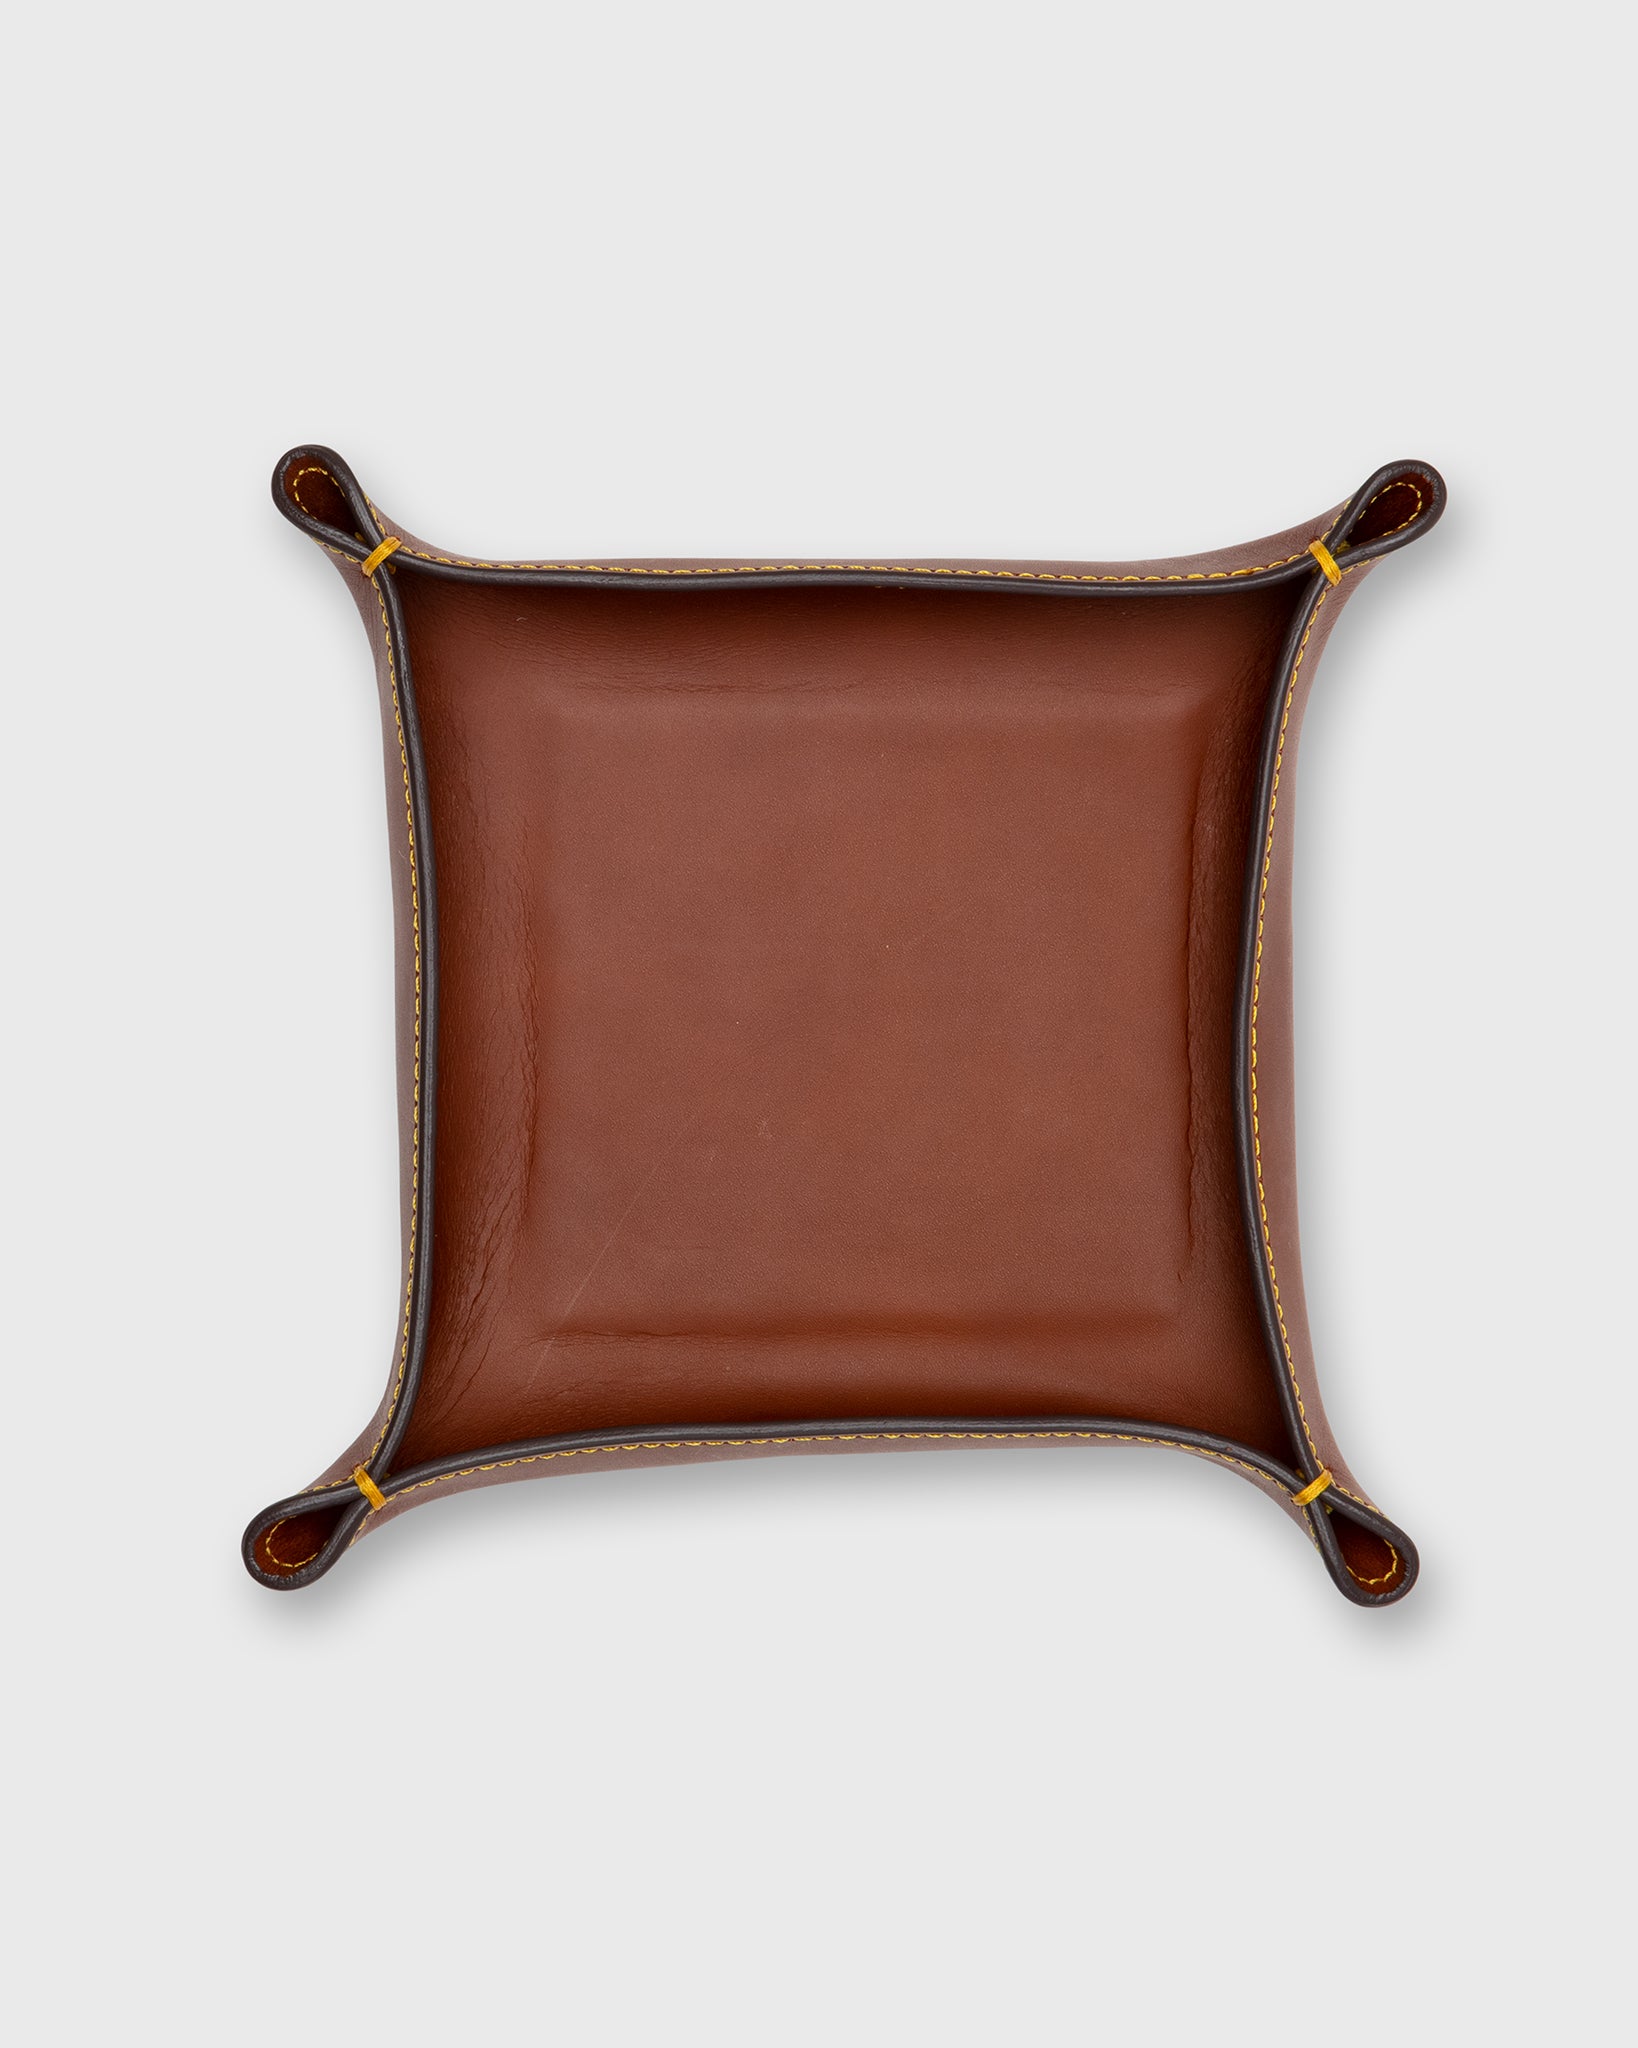 Medium Tray in Golden Leather